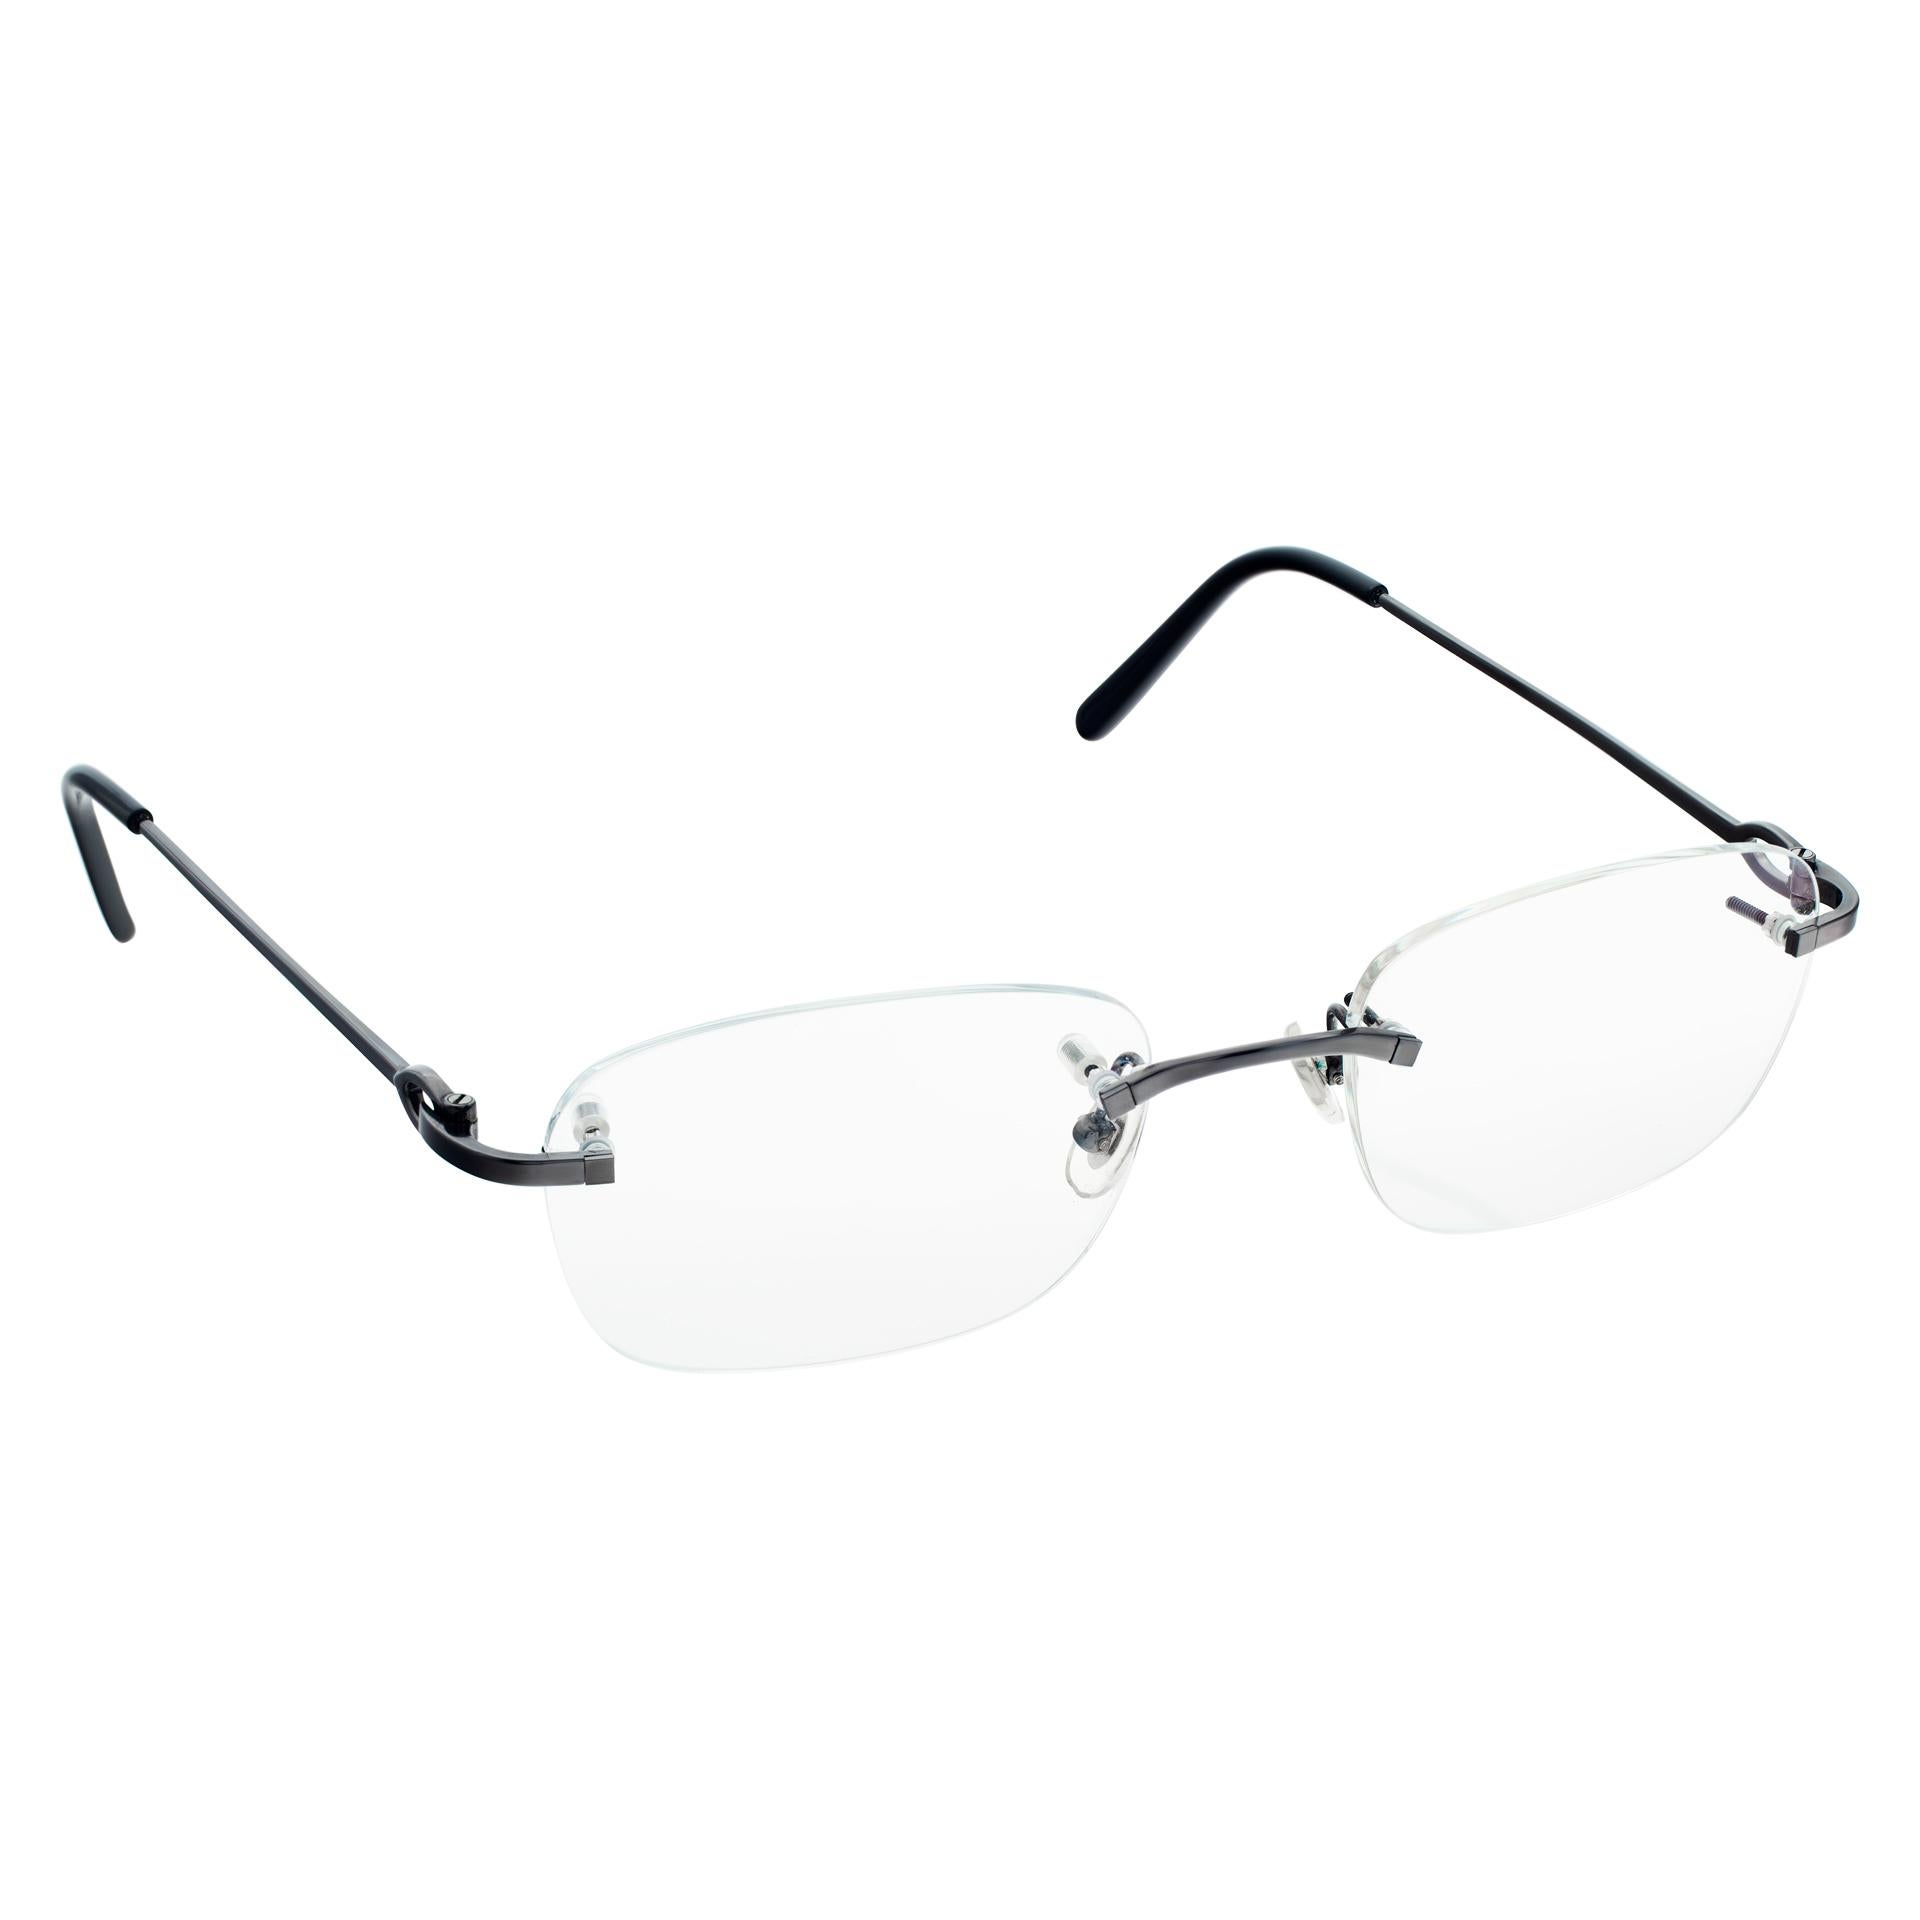 Cartier rimless eyeglasses in black titanium. Lens width 54mm, Bridge 20mm, Temple length 140mm. With stainless steel glasses box.
